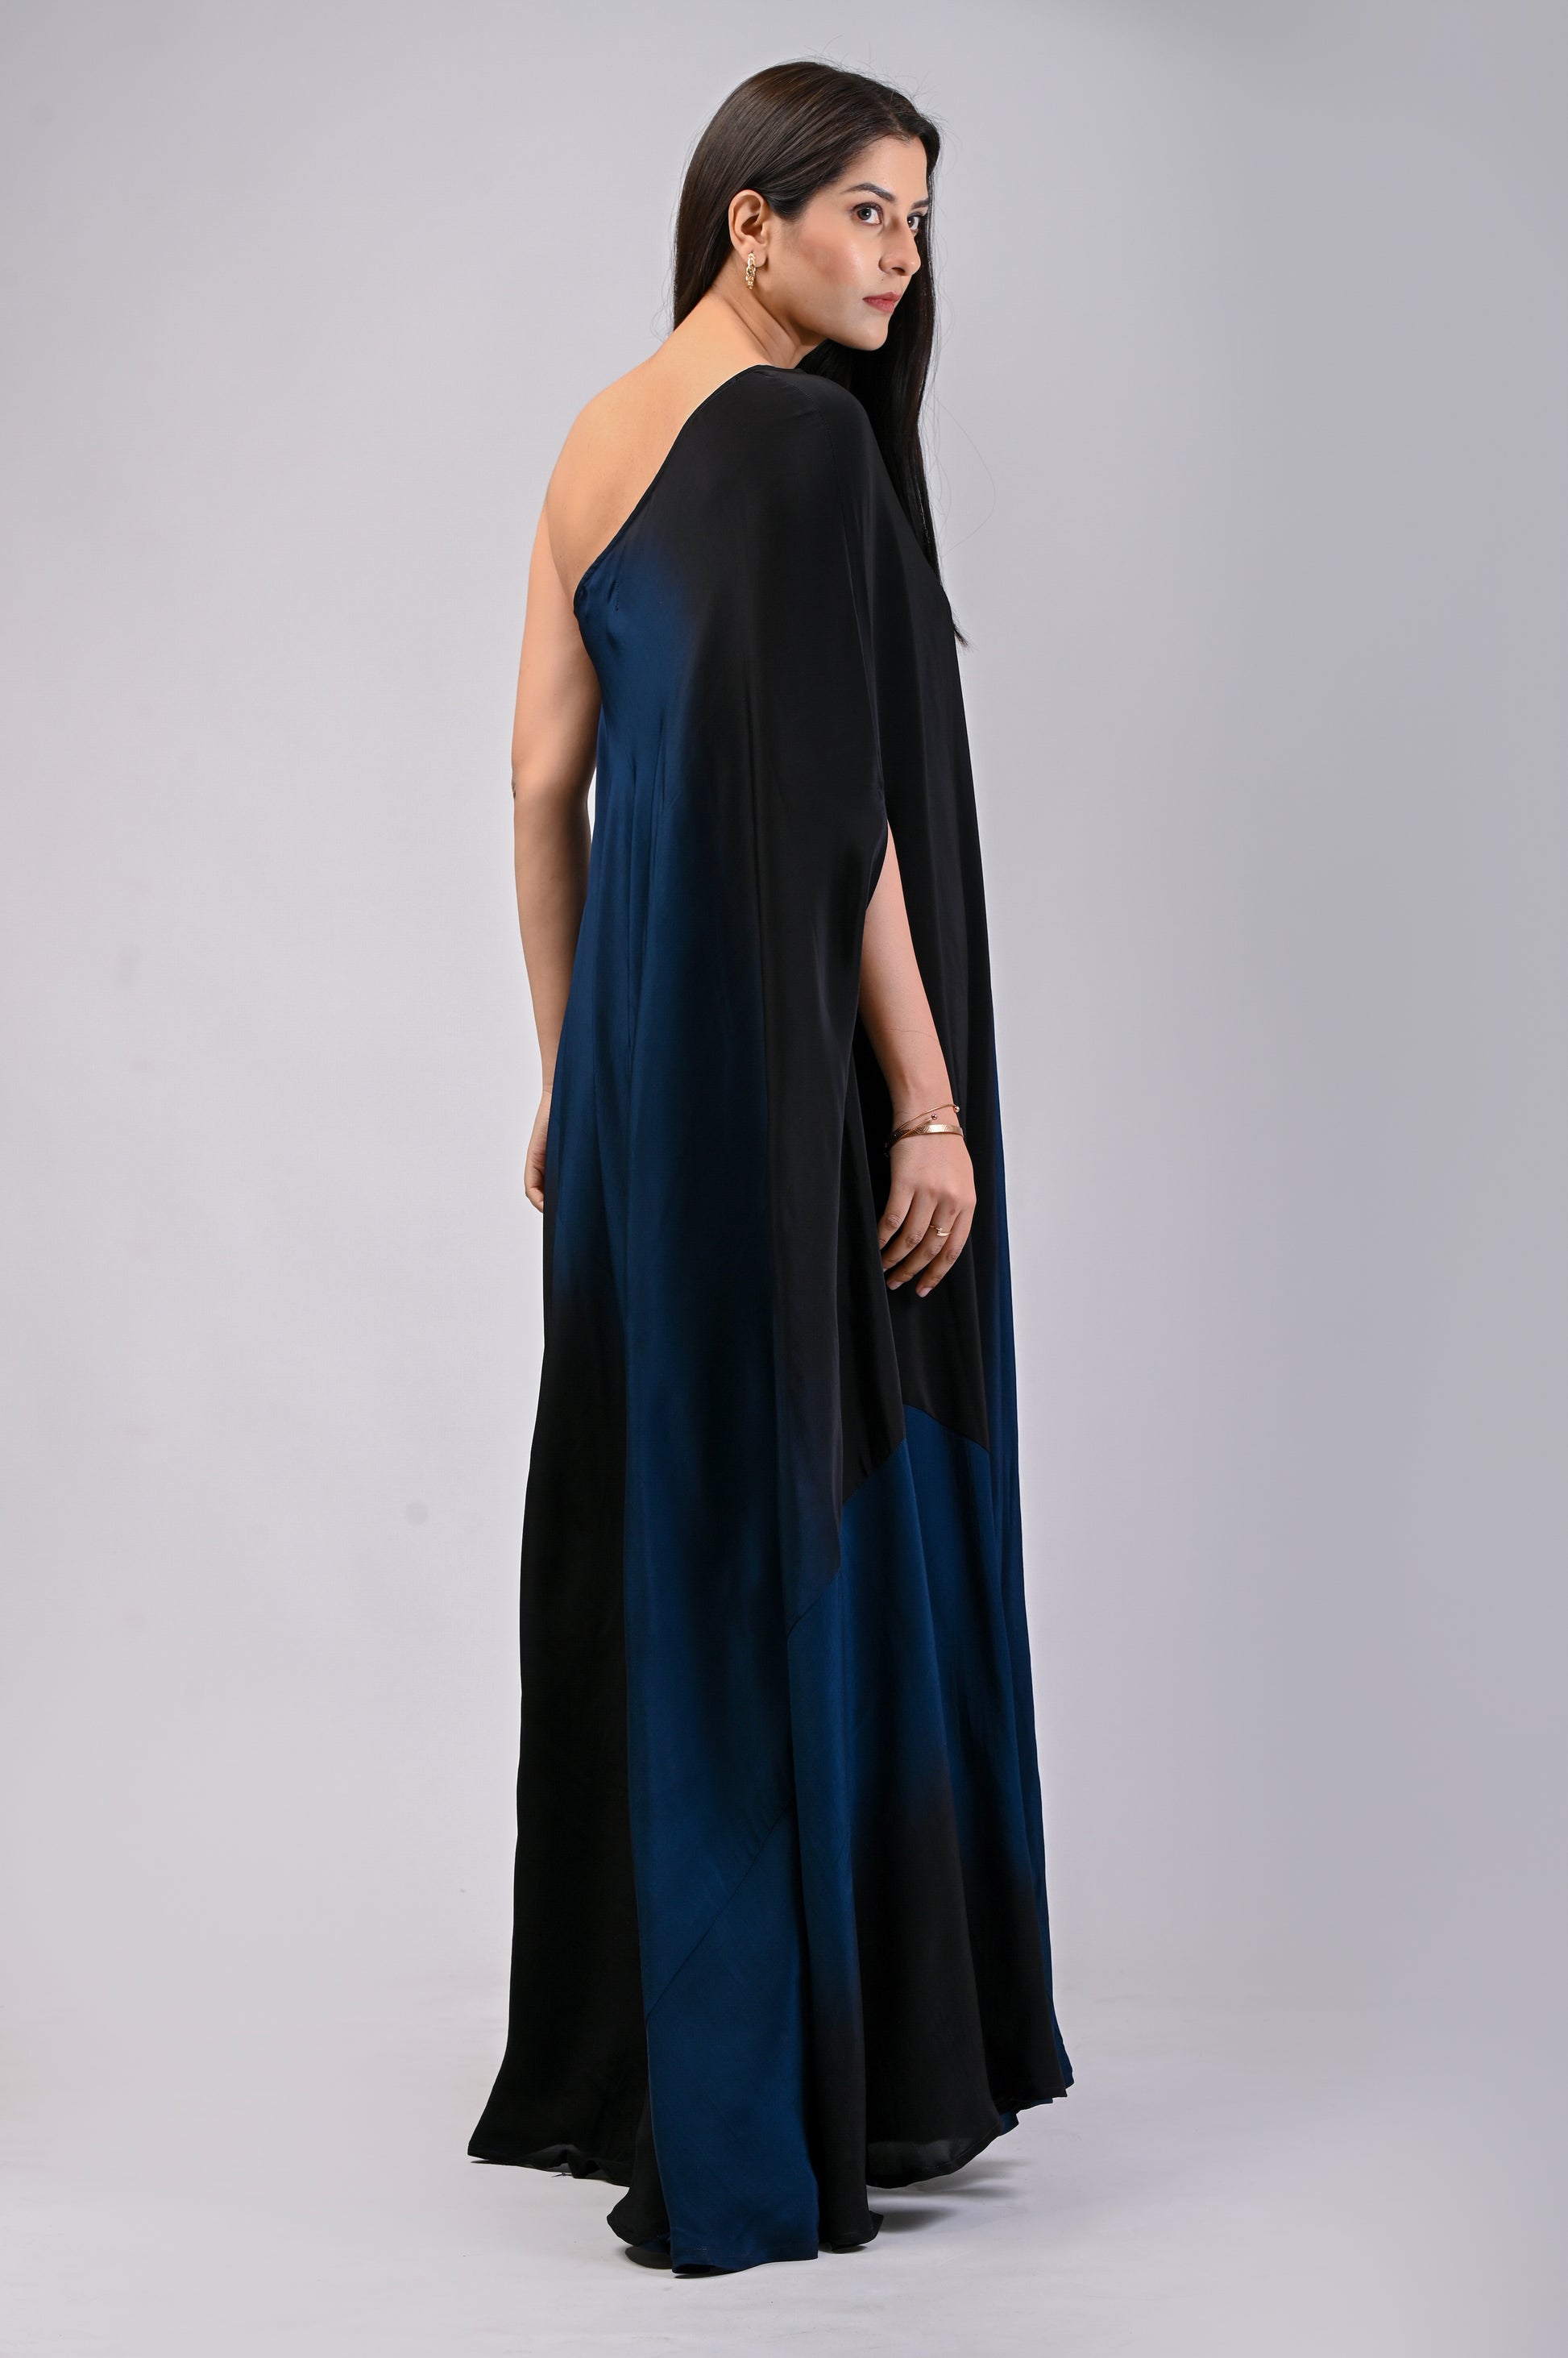 Meihuida New Elegant Women Ladies Fashion Long Sleeve Formal India | Ubuy